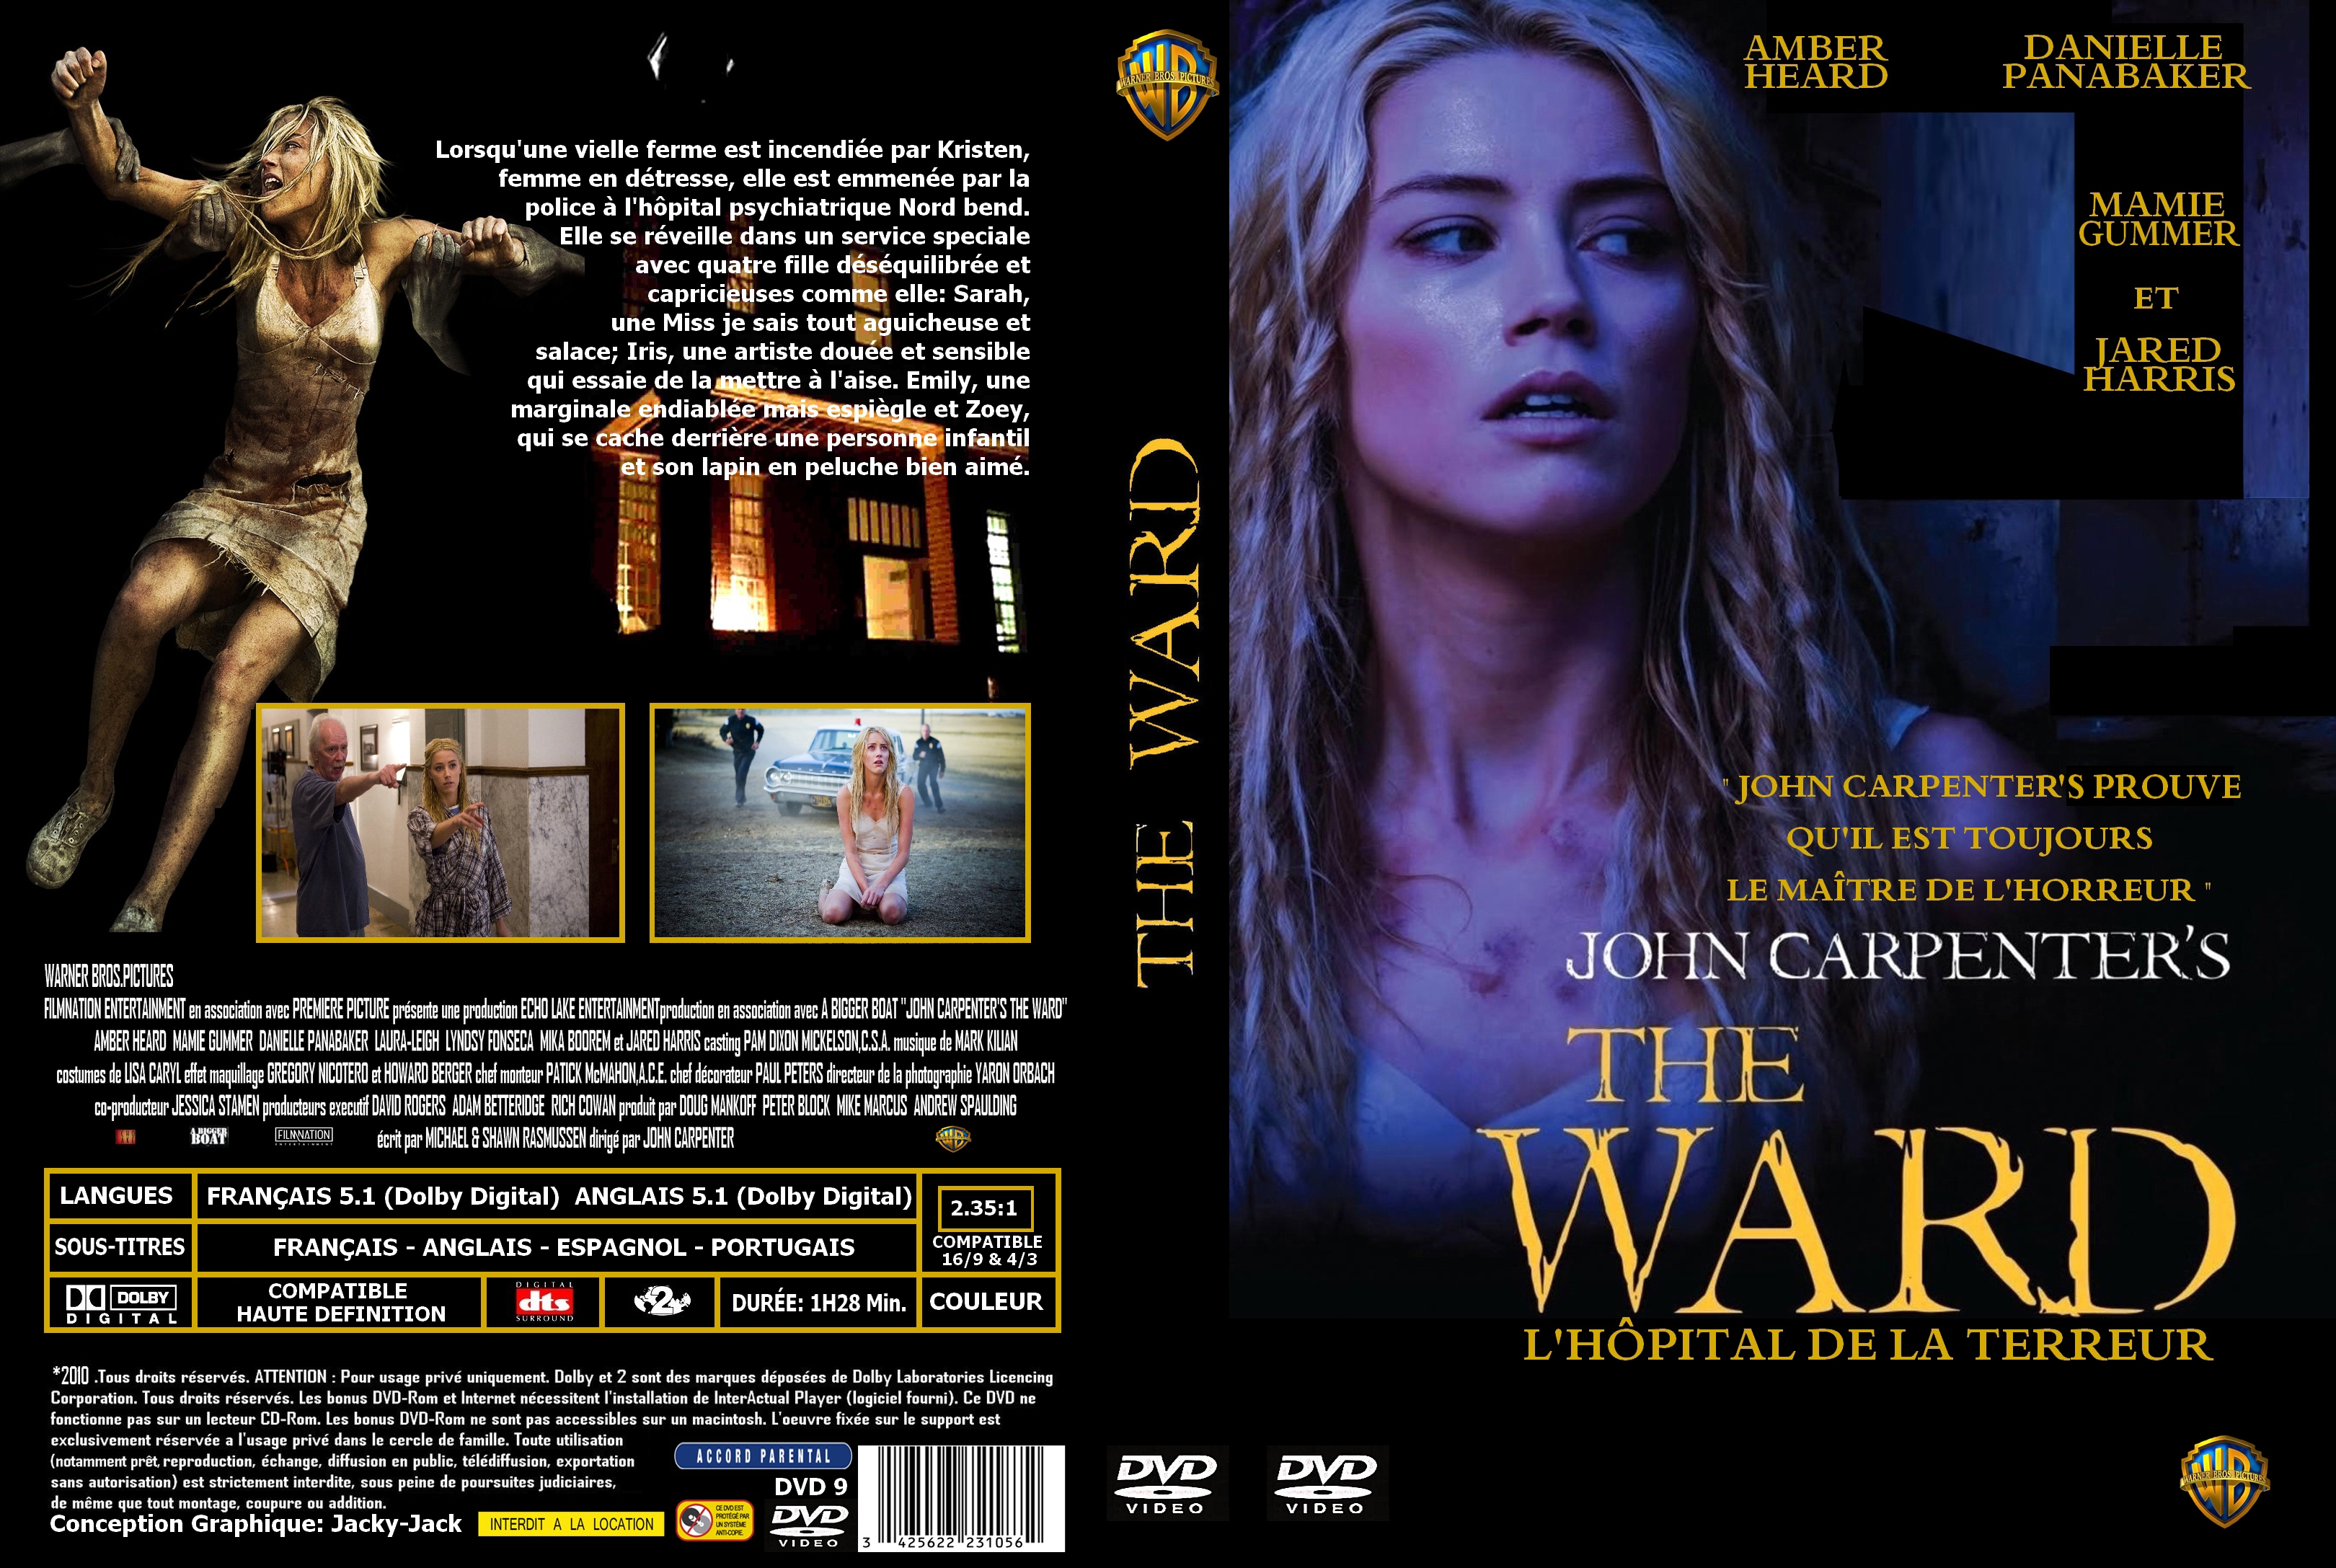 Jaquette DVD The ward custom